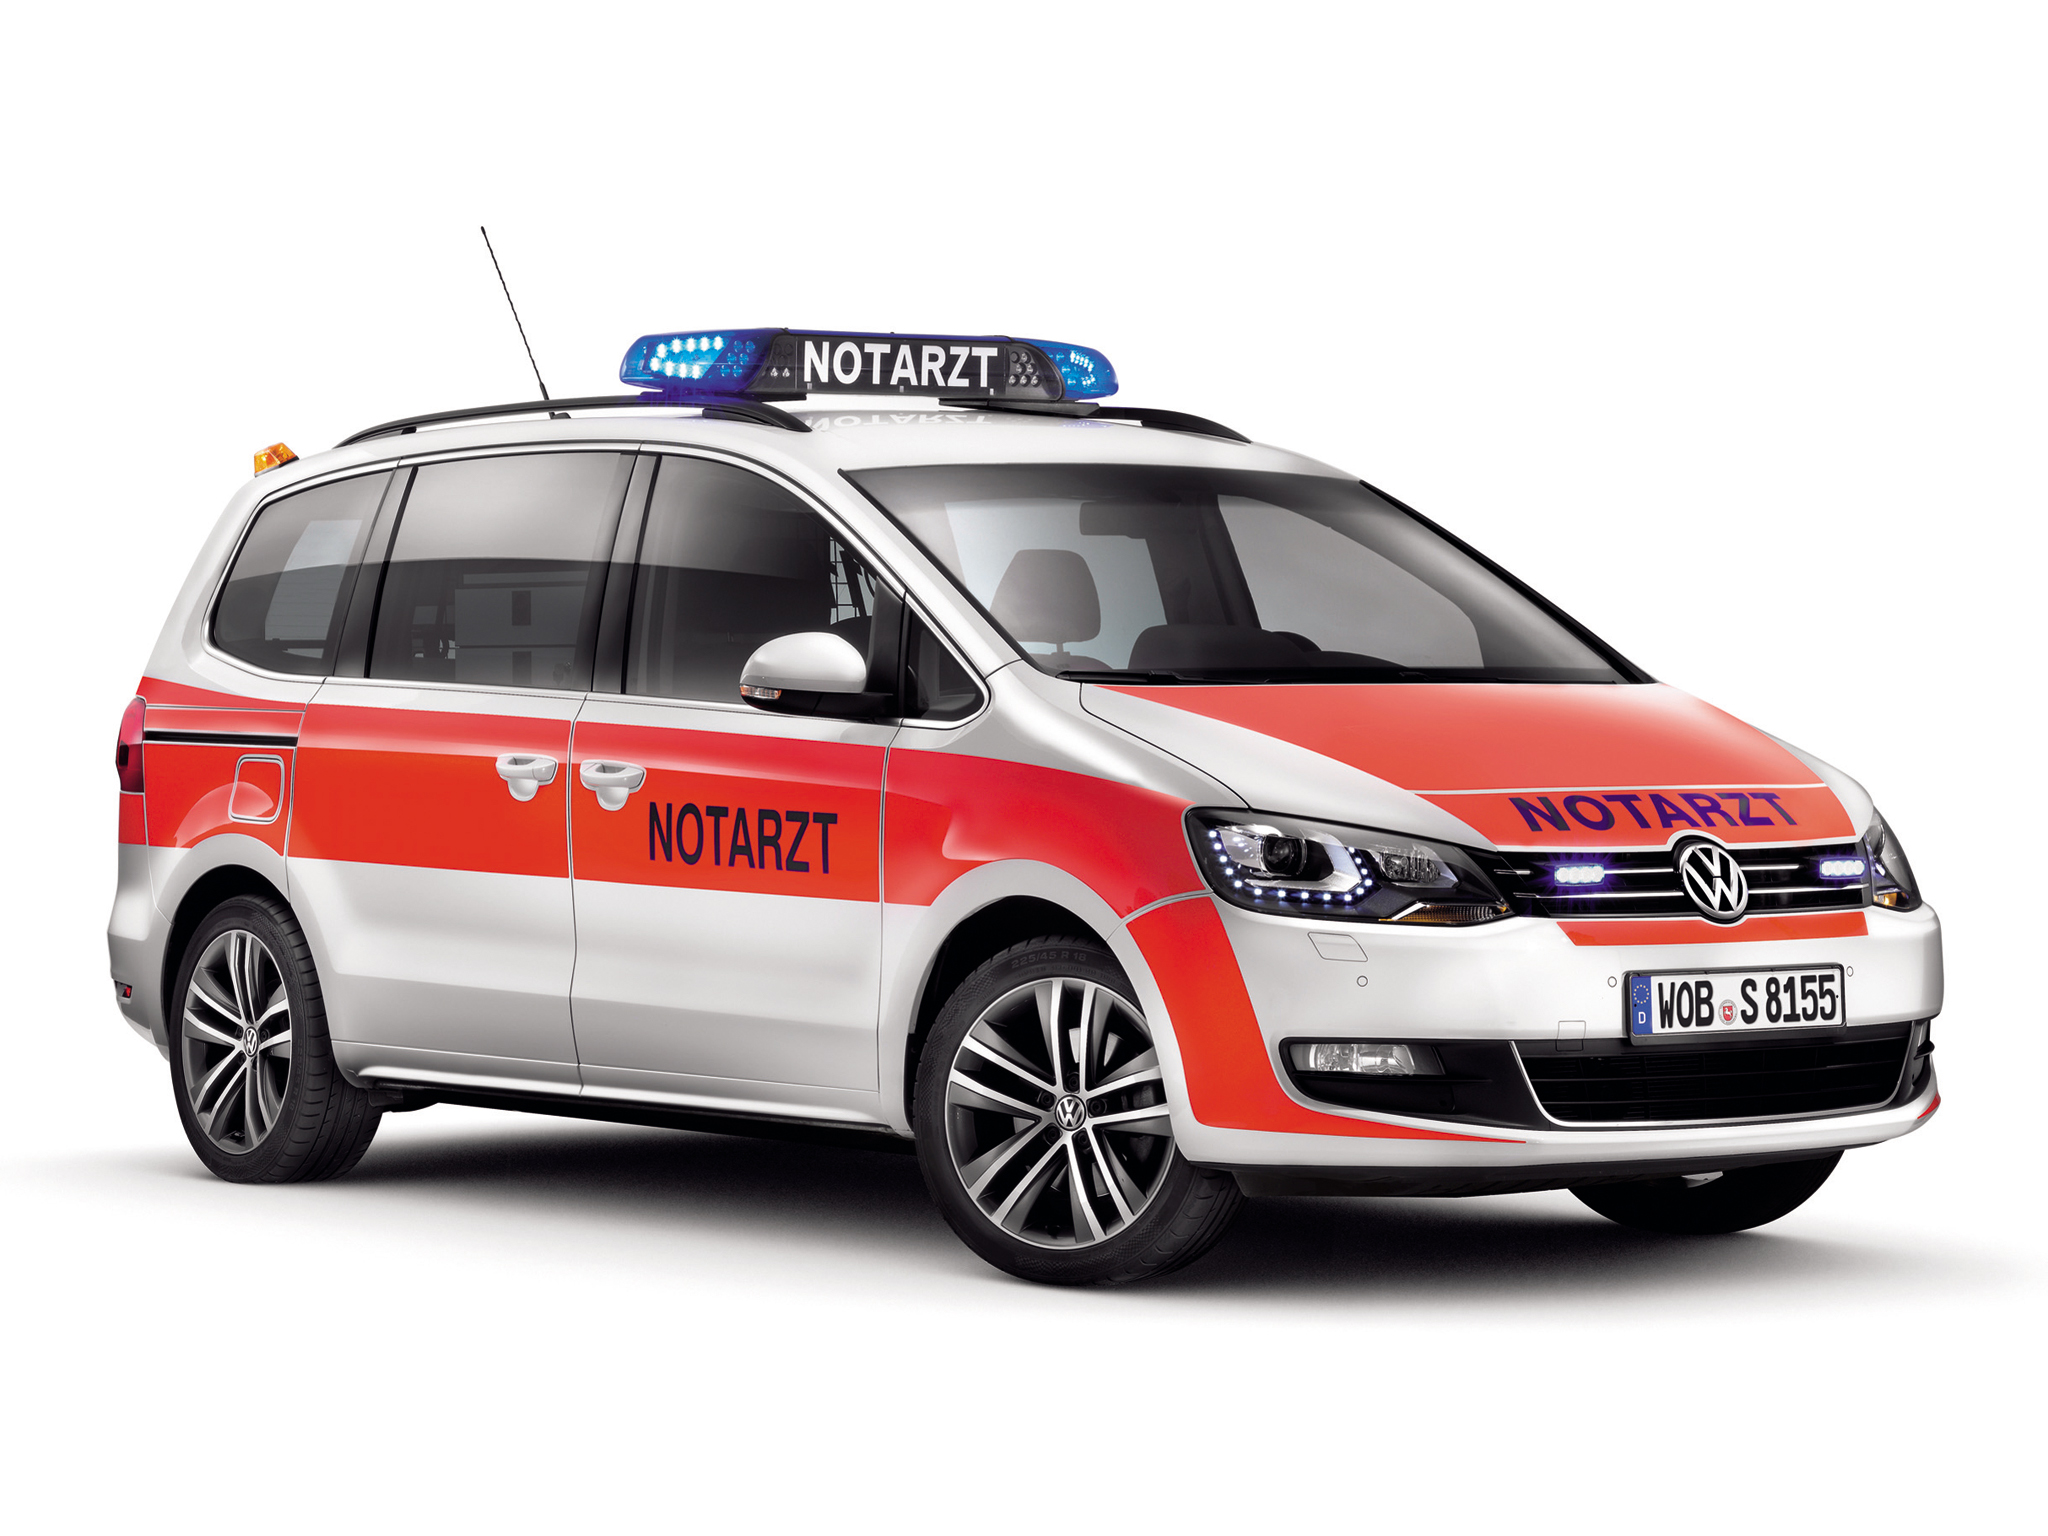 2010, Volkswagen, Sharan, Notarzt, Ambulance, Emergency Wallpaper